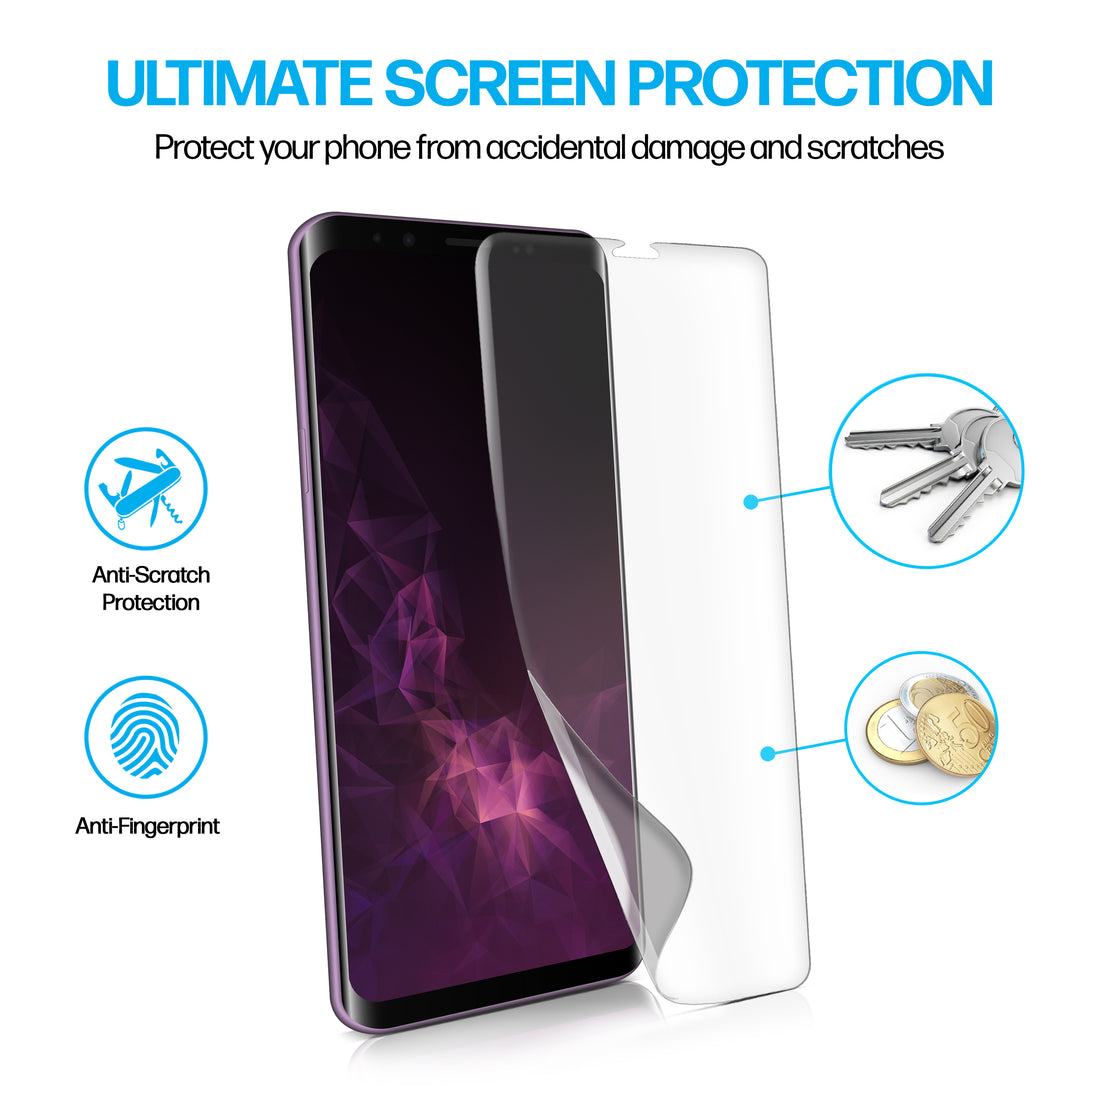 Samsung Galaxy S9 Plus TPU Anti-Scratch Screen Protector Film [2-Pack] Preview #7